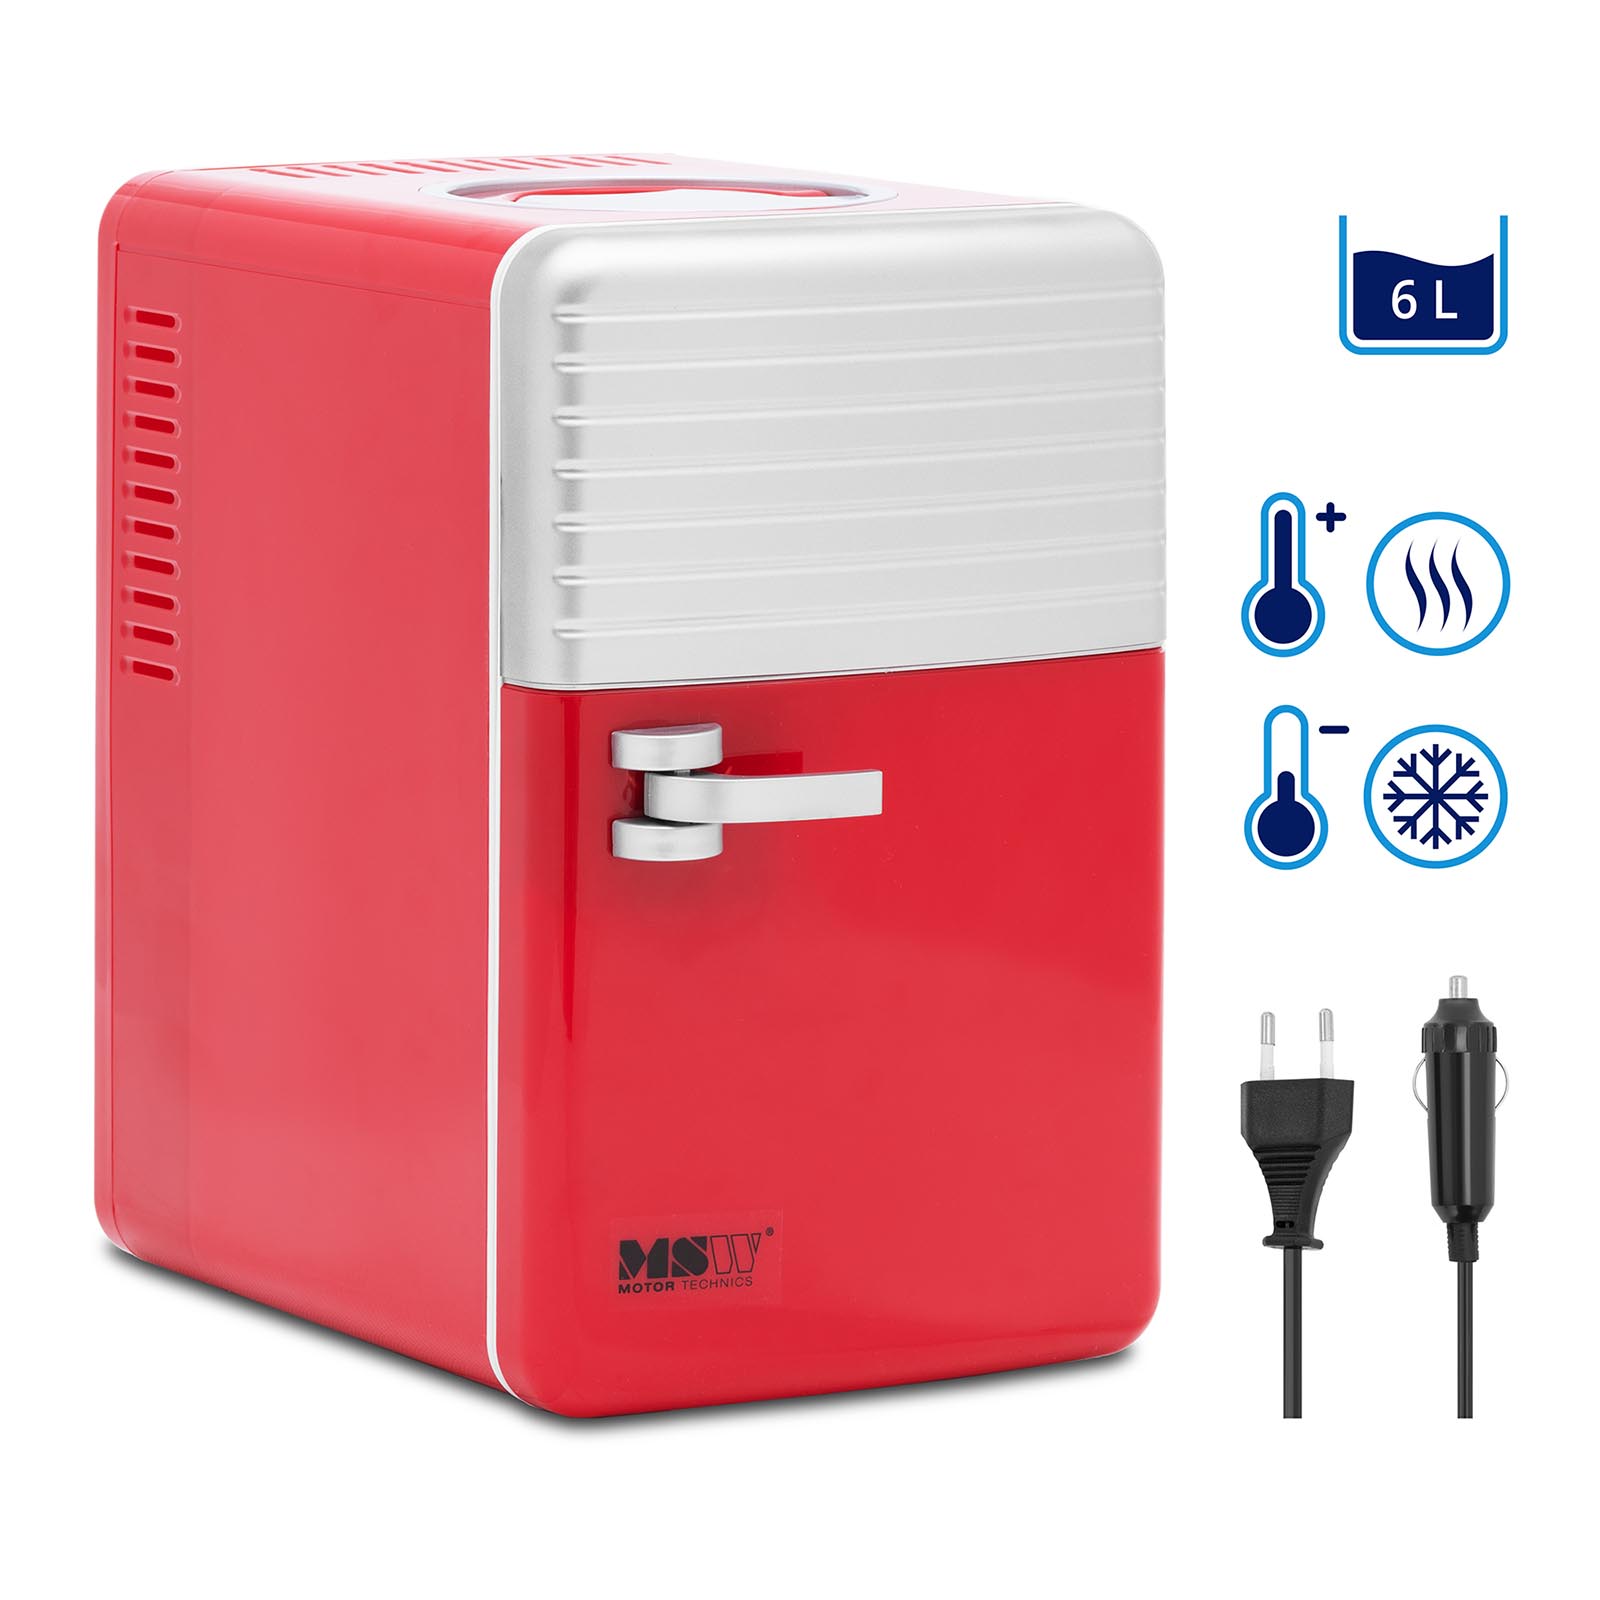 Mini-Kühlschrank 12 V / 230 V - 2-in-1-Gerät mit Warmhaltefunktion - 6 L - Rot/silbern